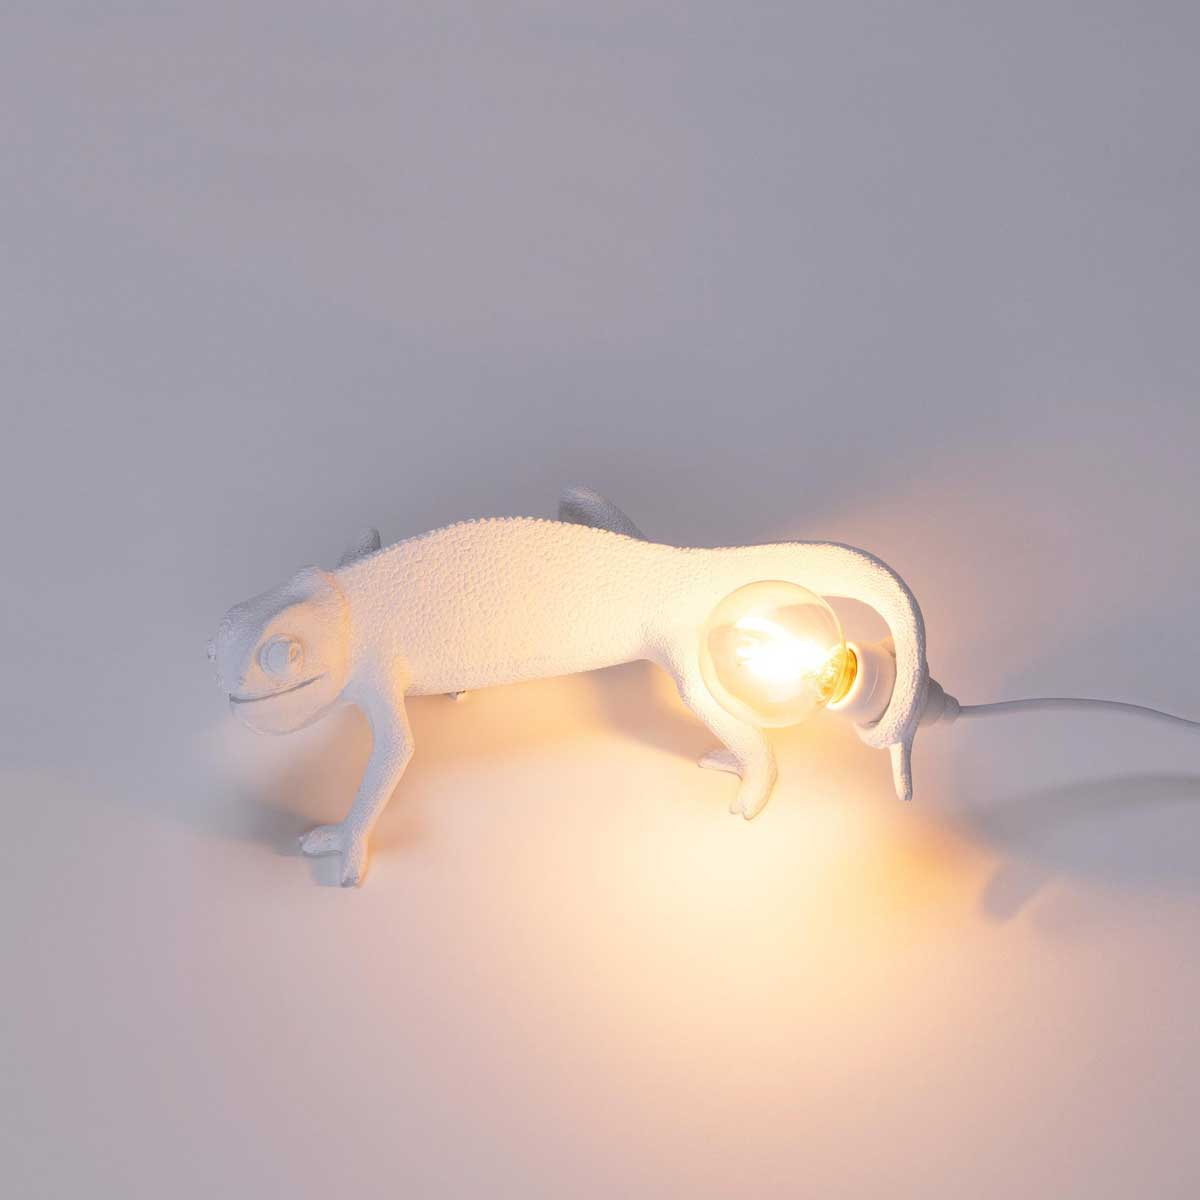 Chameleon Lamp - New Old For You